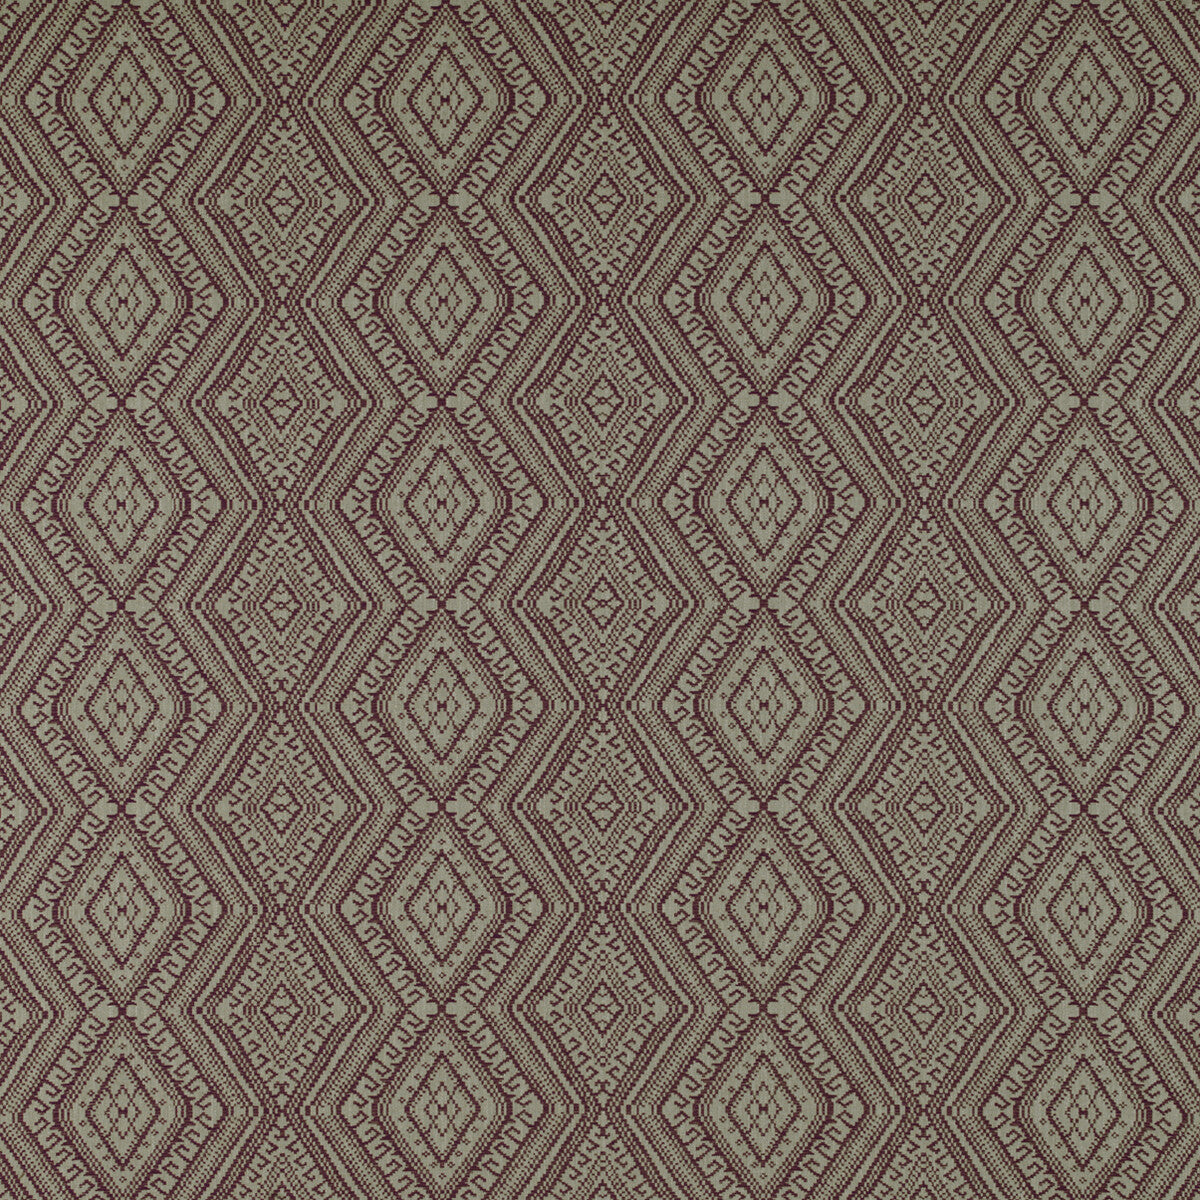 Milan fabric in burdeos color - pattern GDT5326.005.0 - by Gaston y Daniela in the Tierras collection